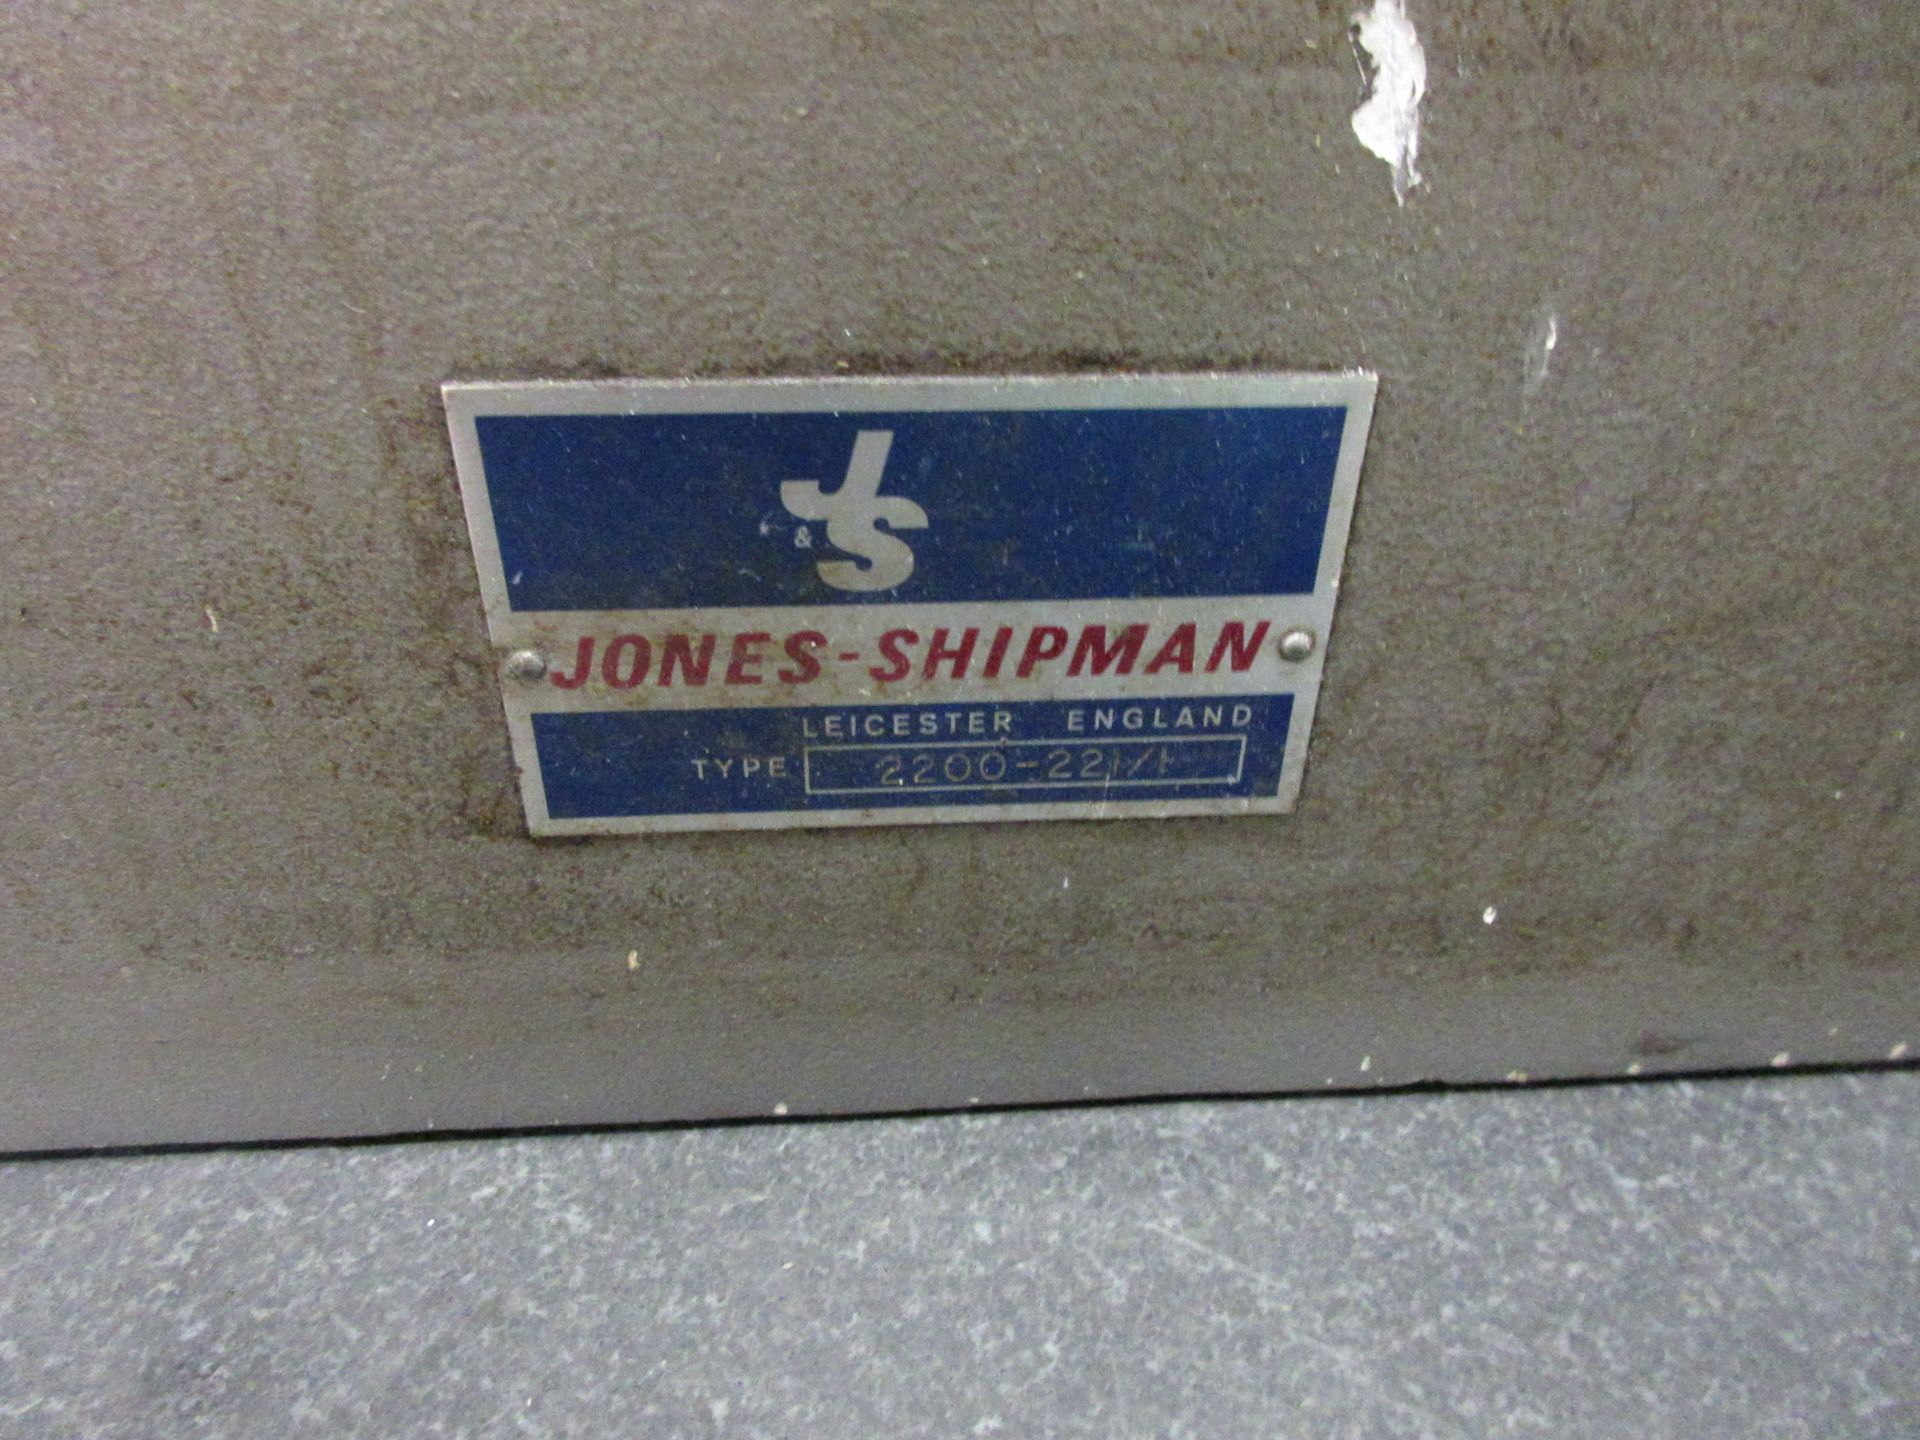 Jones & Shipman bench centres, type 2200-21/1, 22" Btc - Image 2 of 3